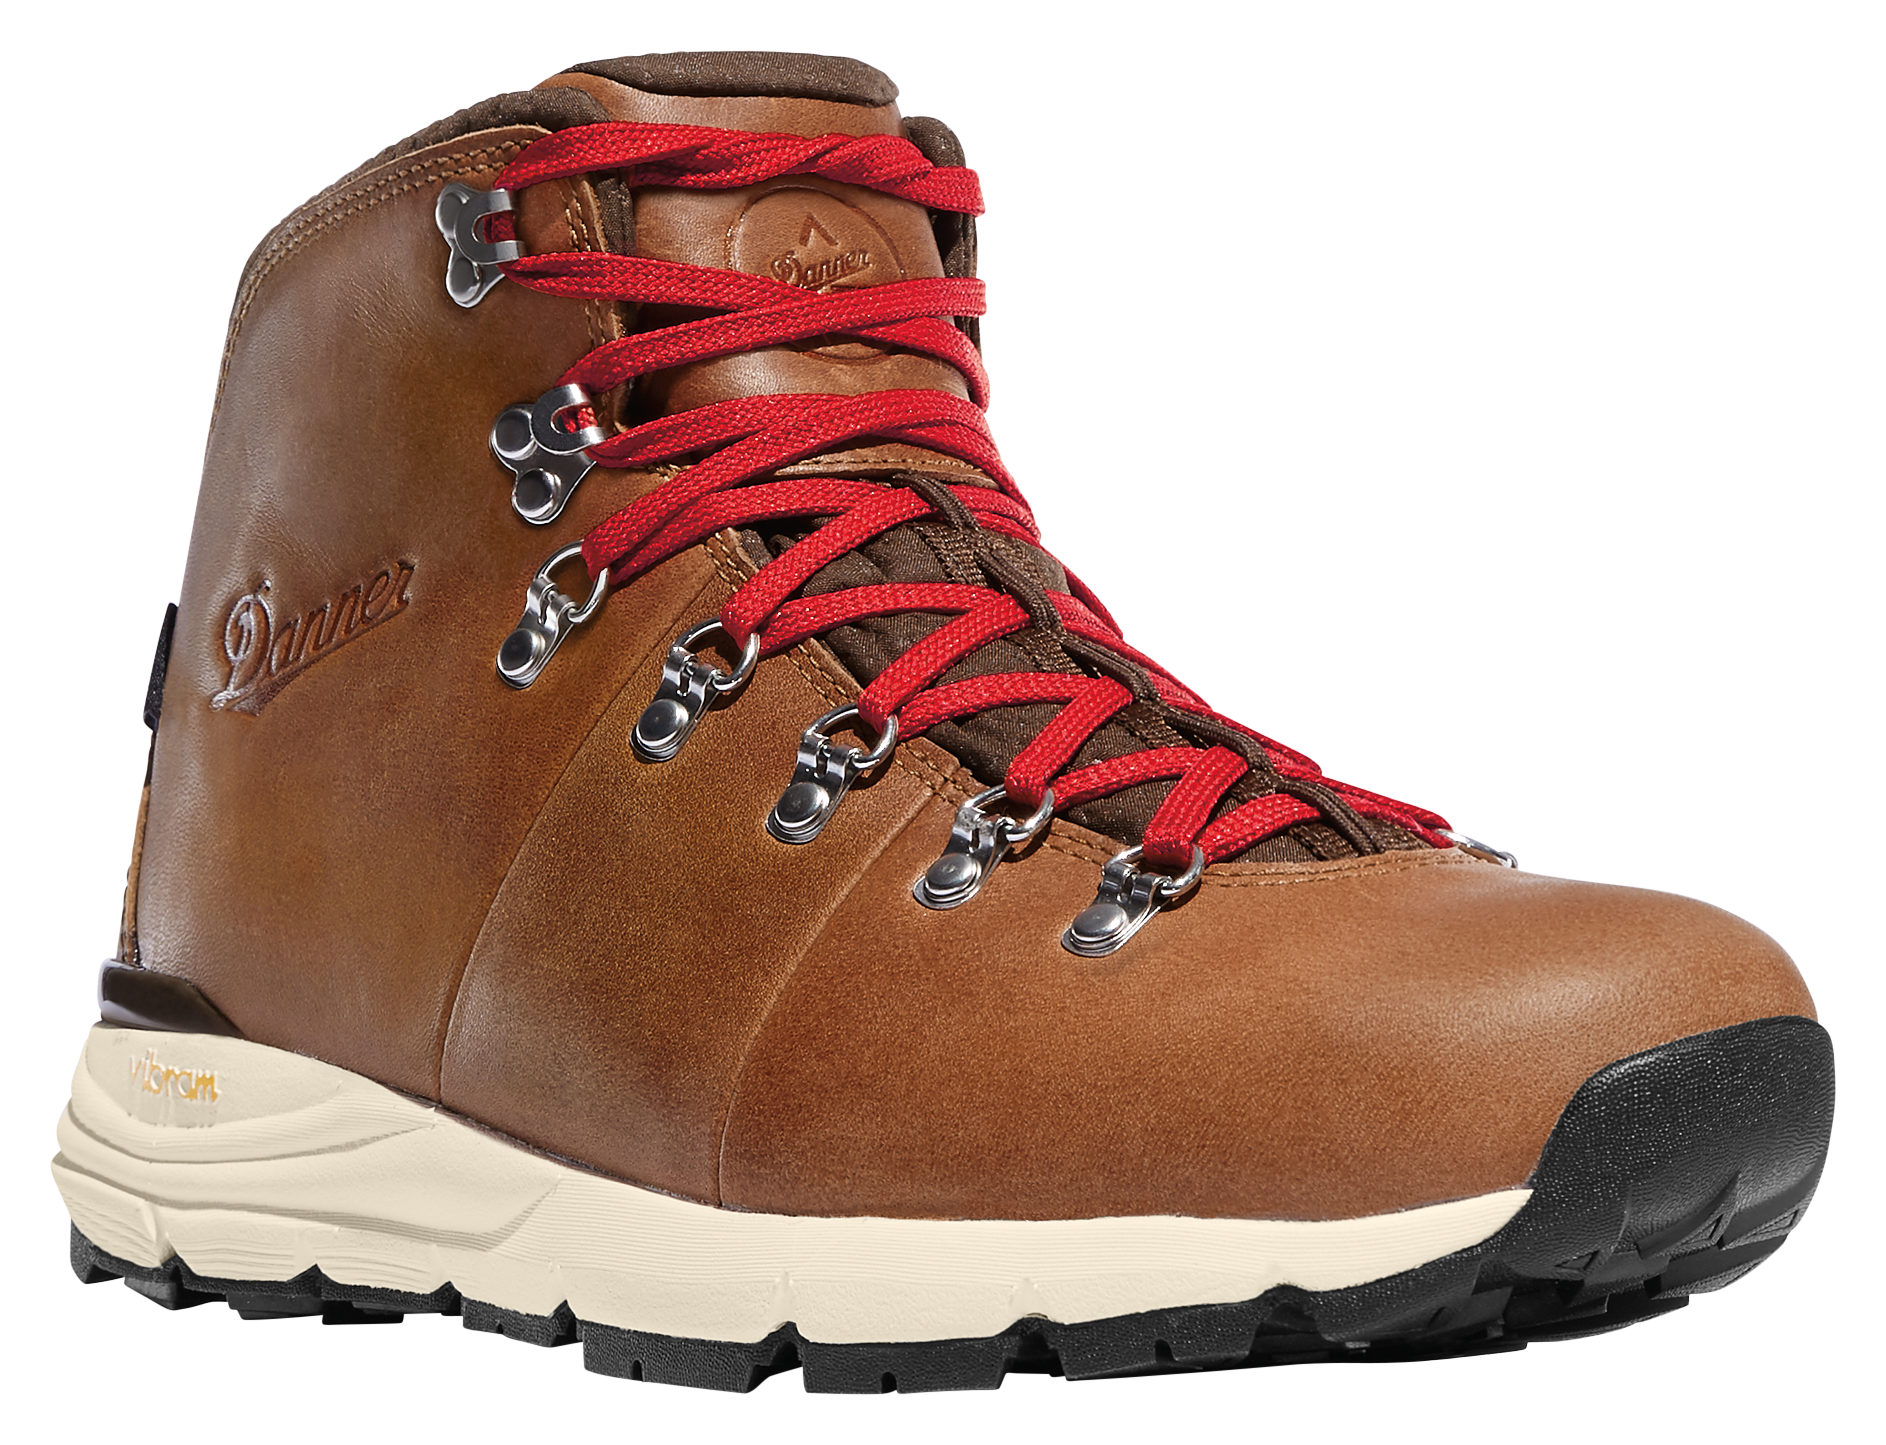 Danner Mountain 600 Waterproof Hiking Boots for Men - Saddle Tan - 10M